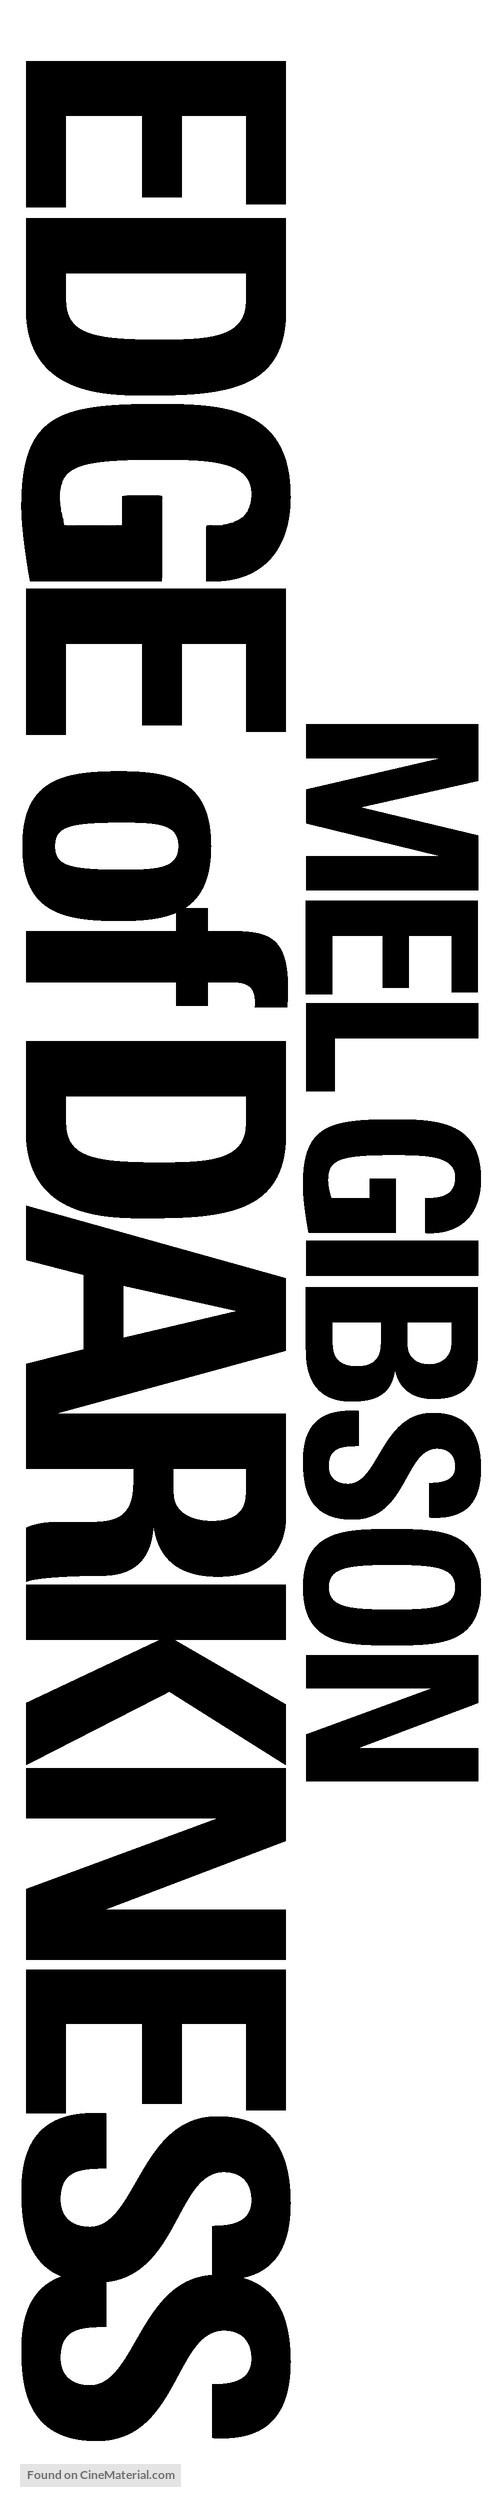 Edge of Darkness - Logo